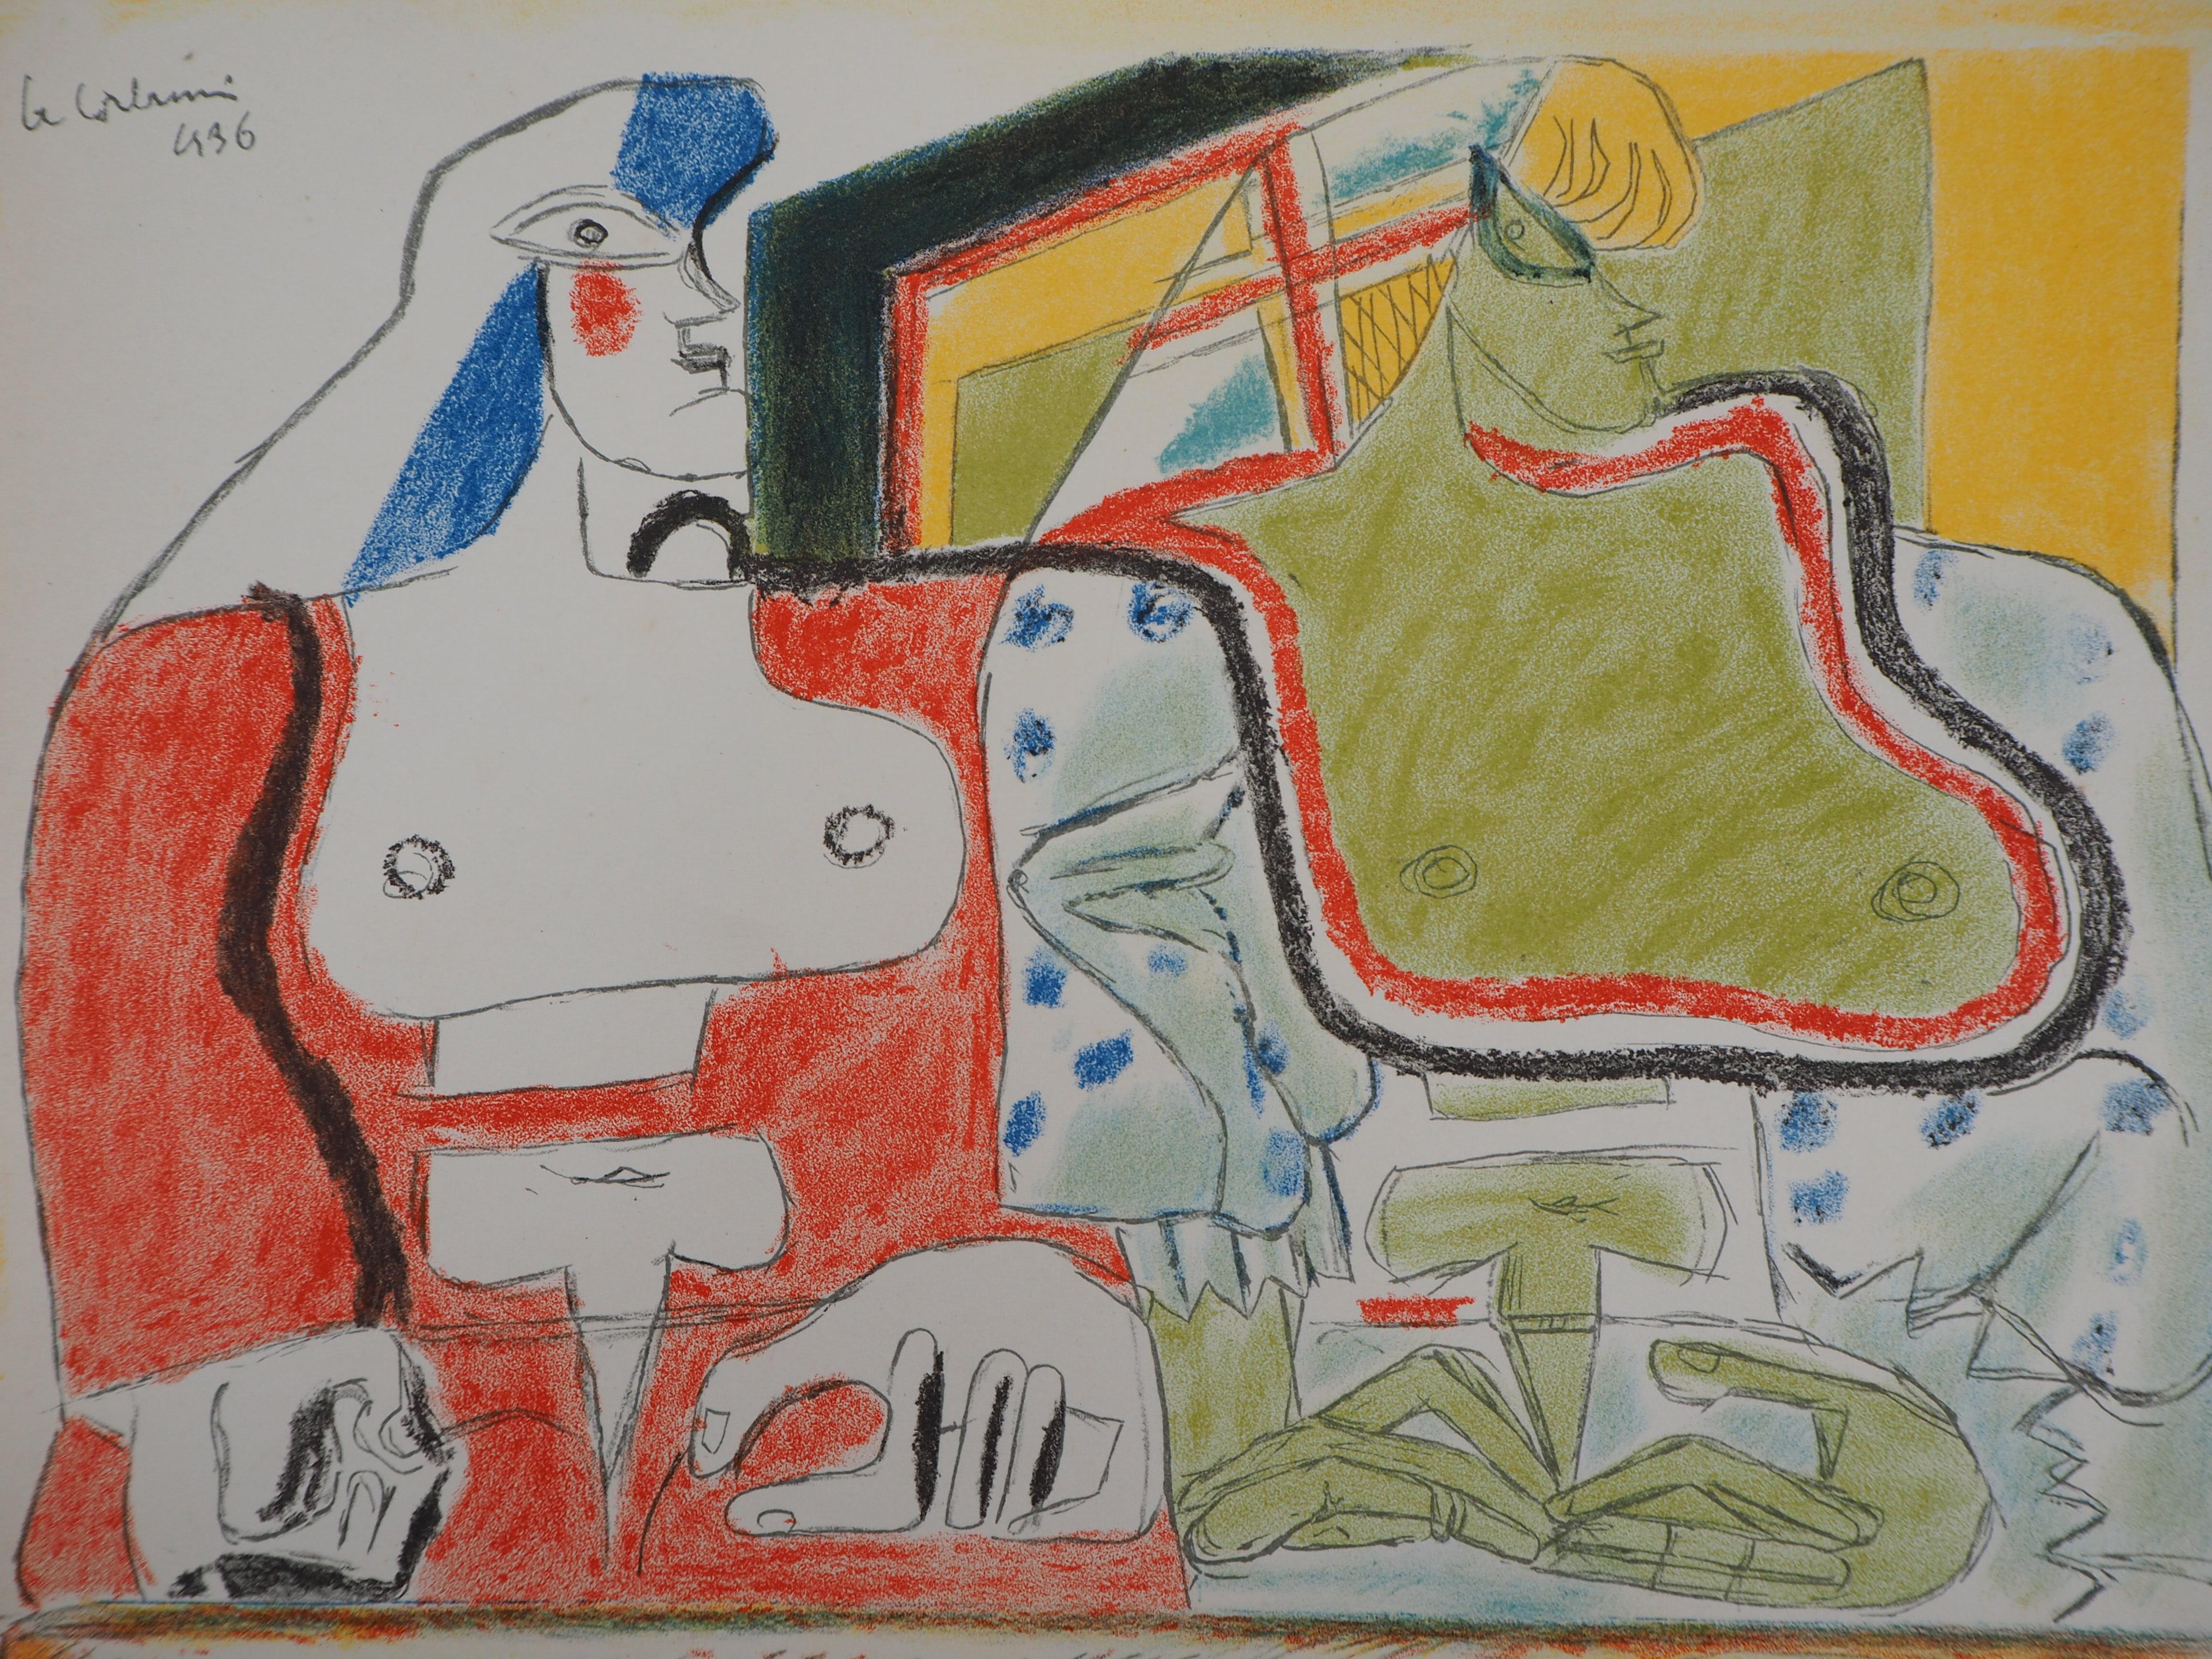 Two Spanish Women - Original Lithograph - Cubist Print by Le Corbusier